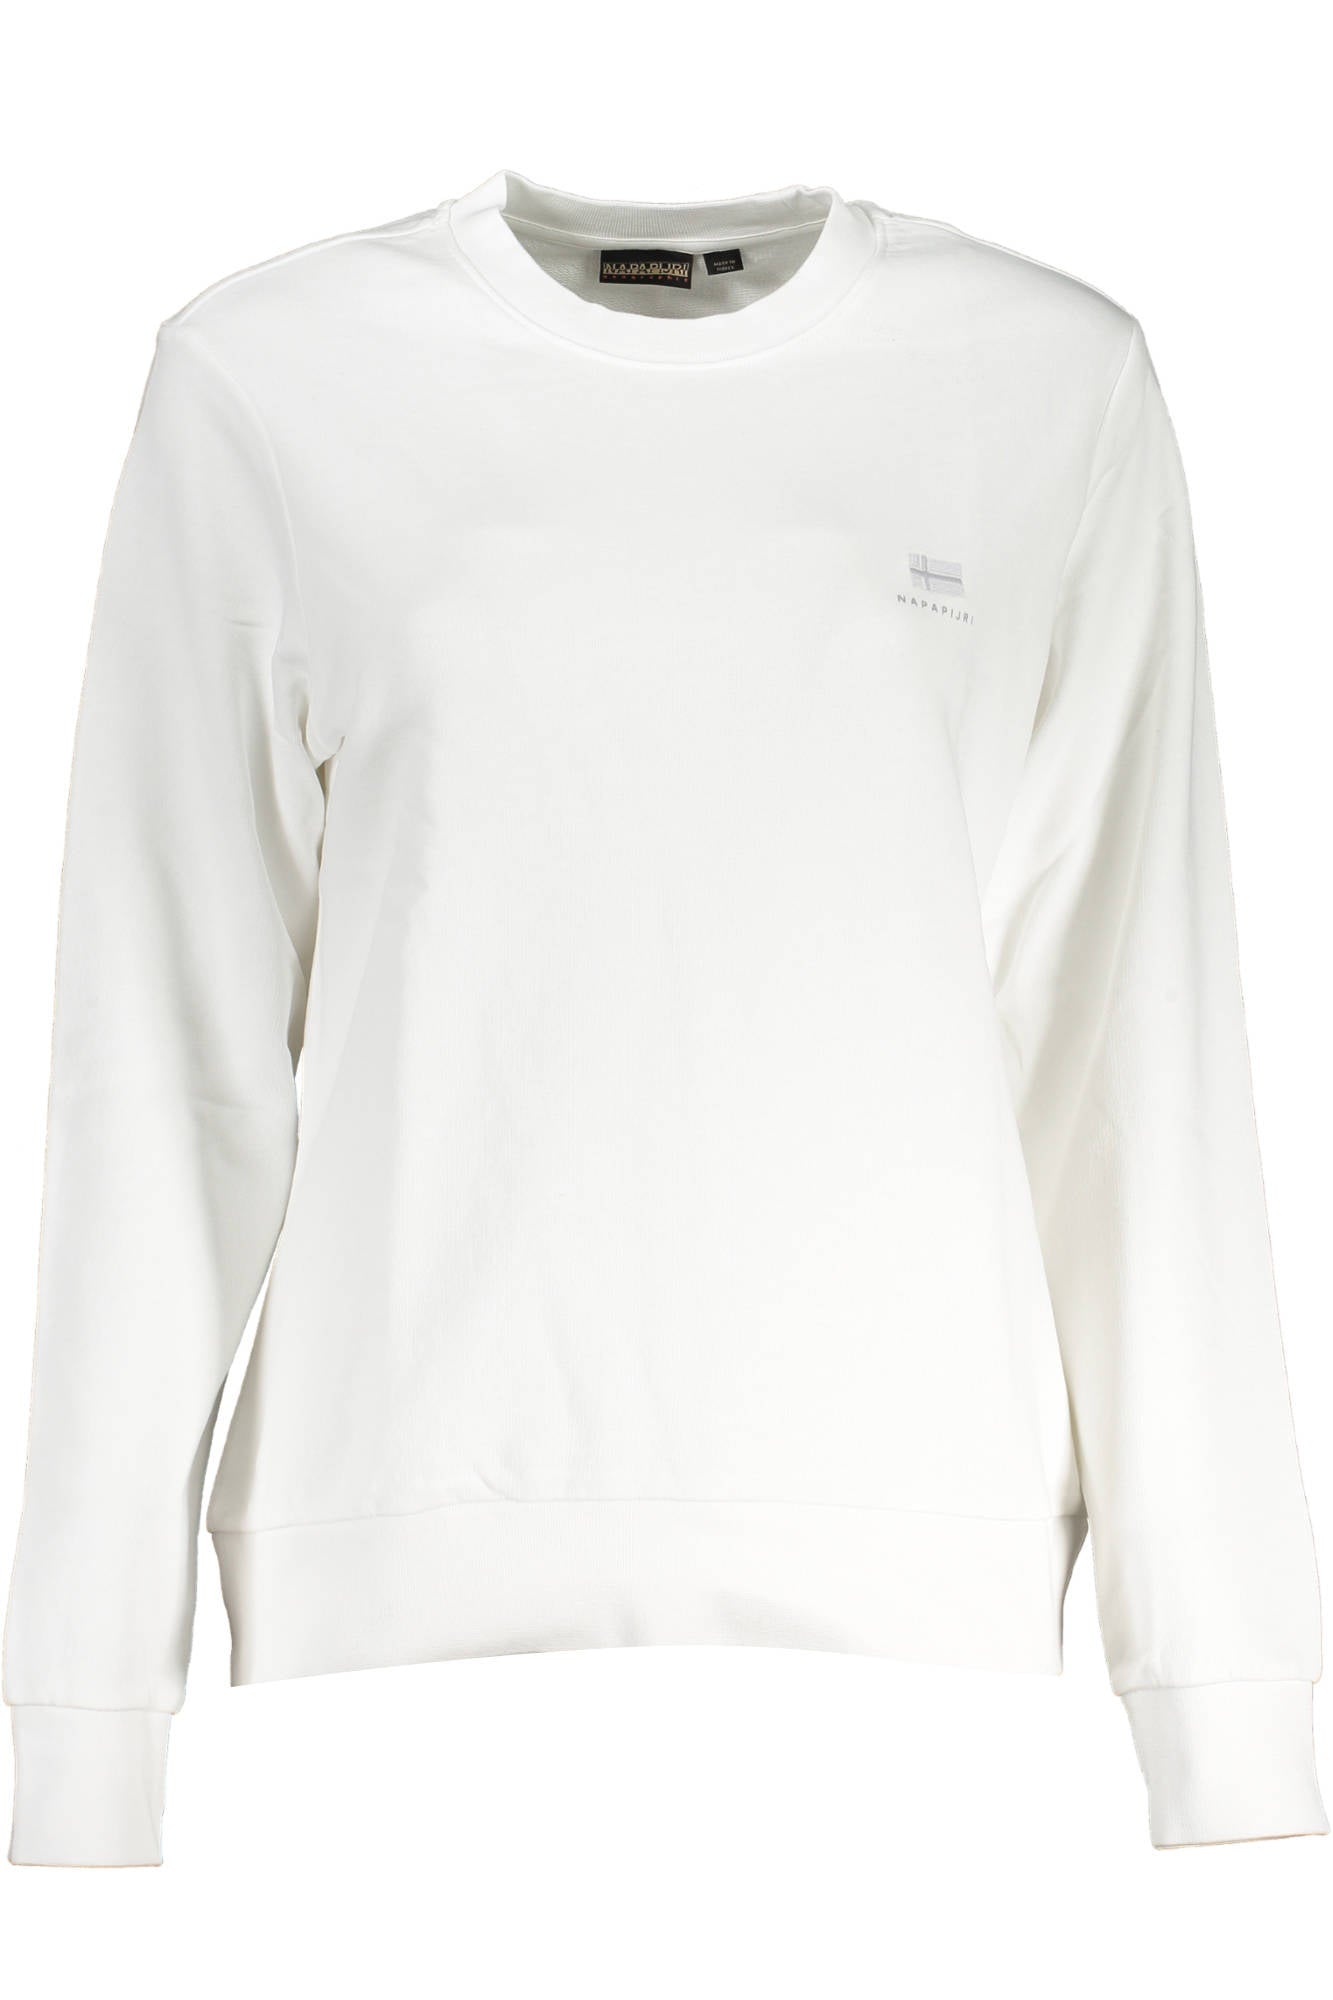 Napapijri White Cotton Sweater - Fizigo